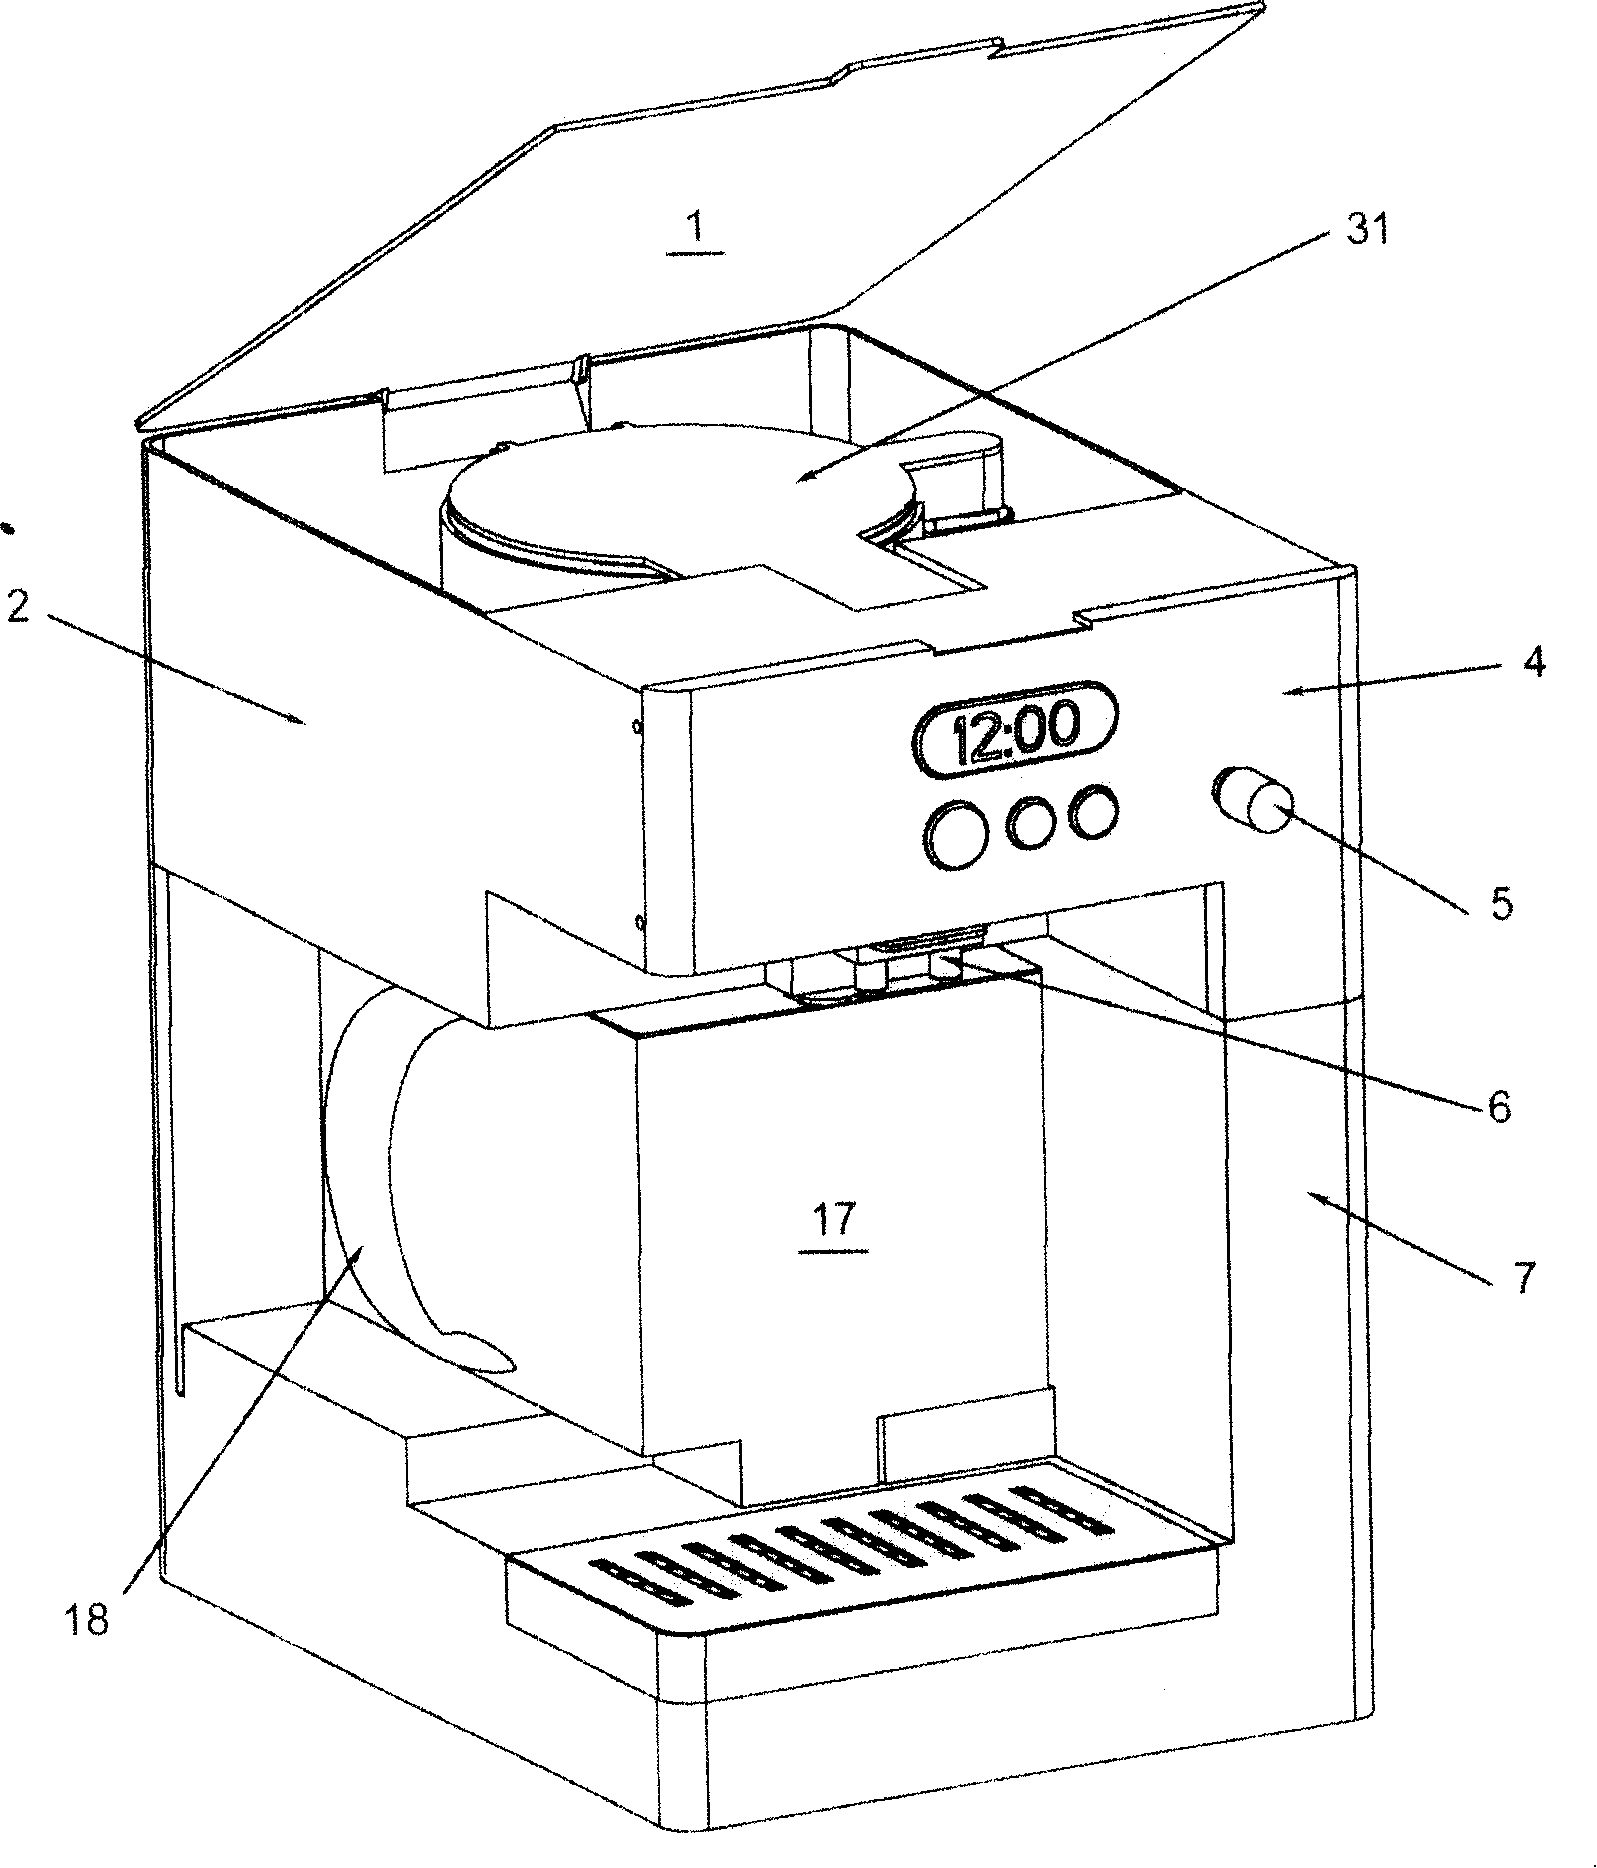 Hot drinks machine with distribution mechanism